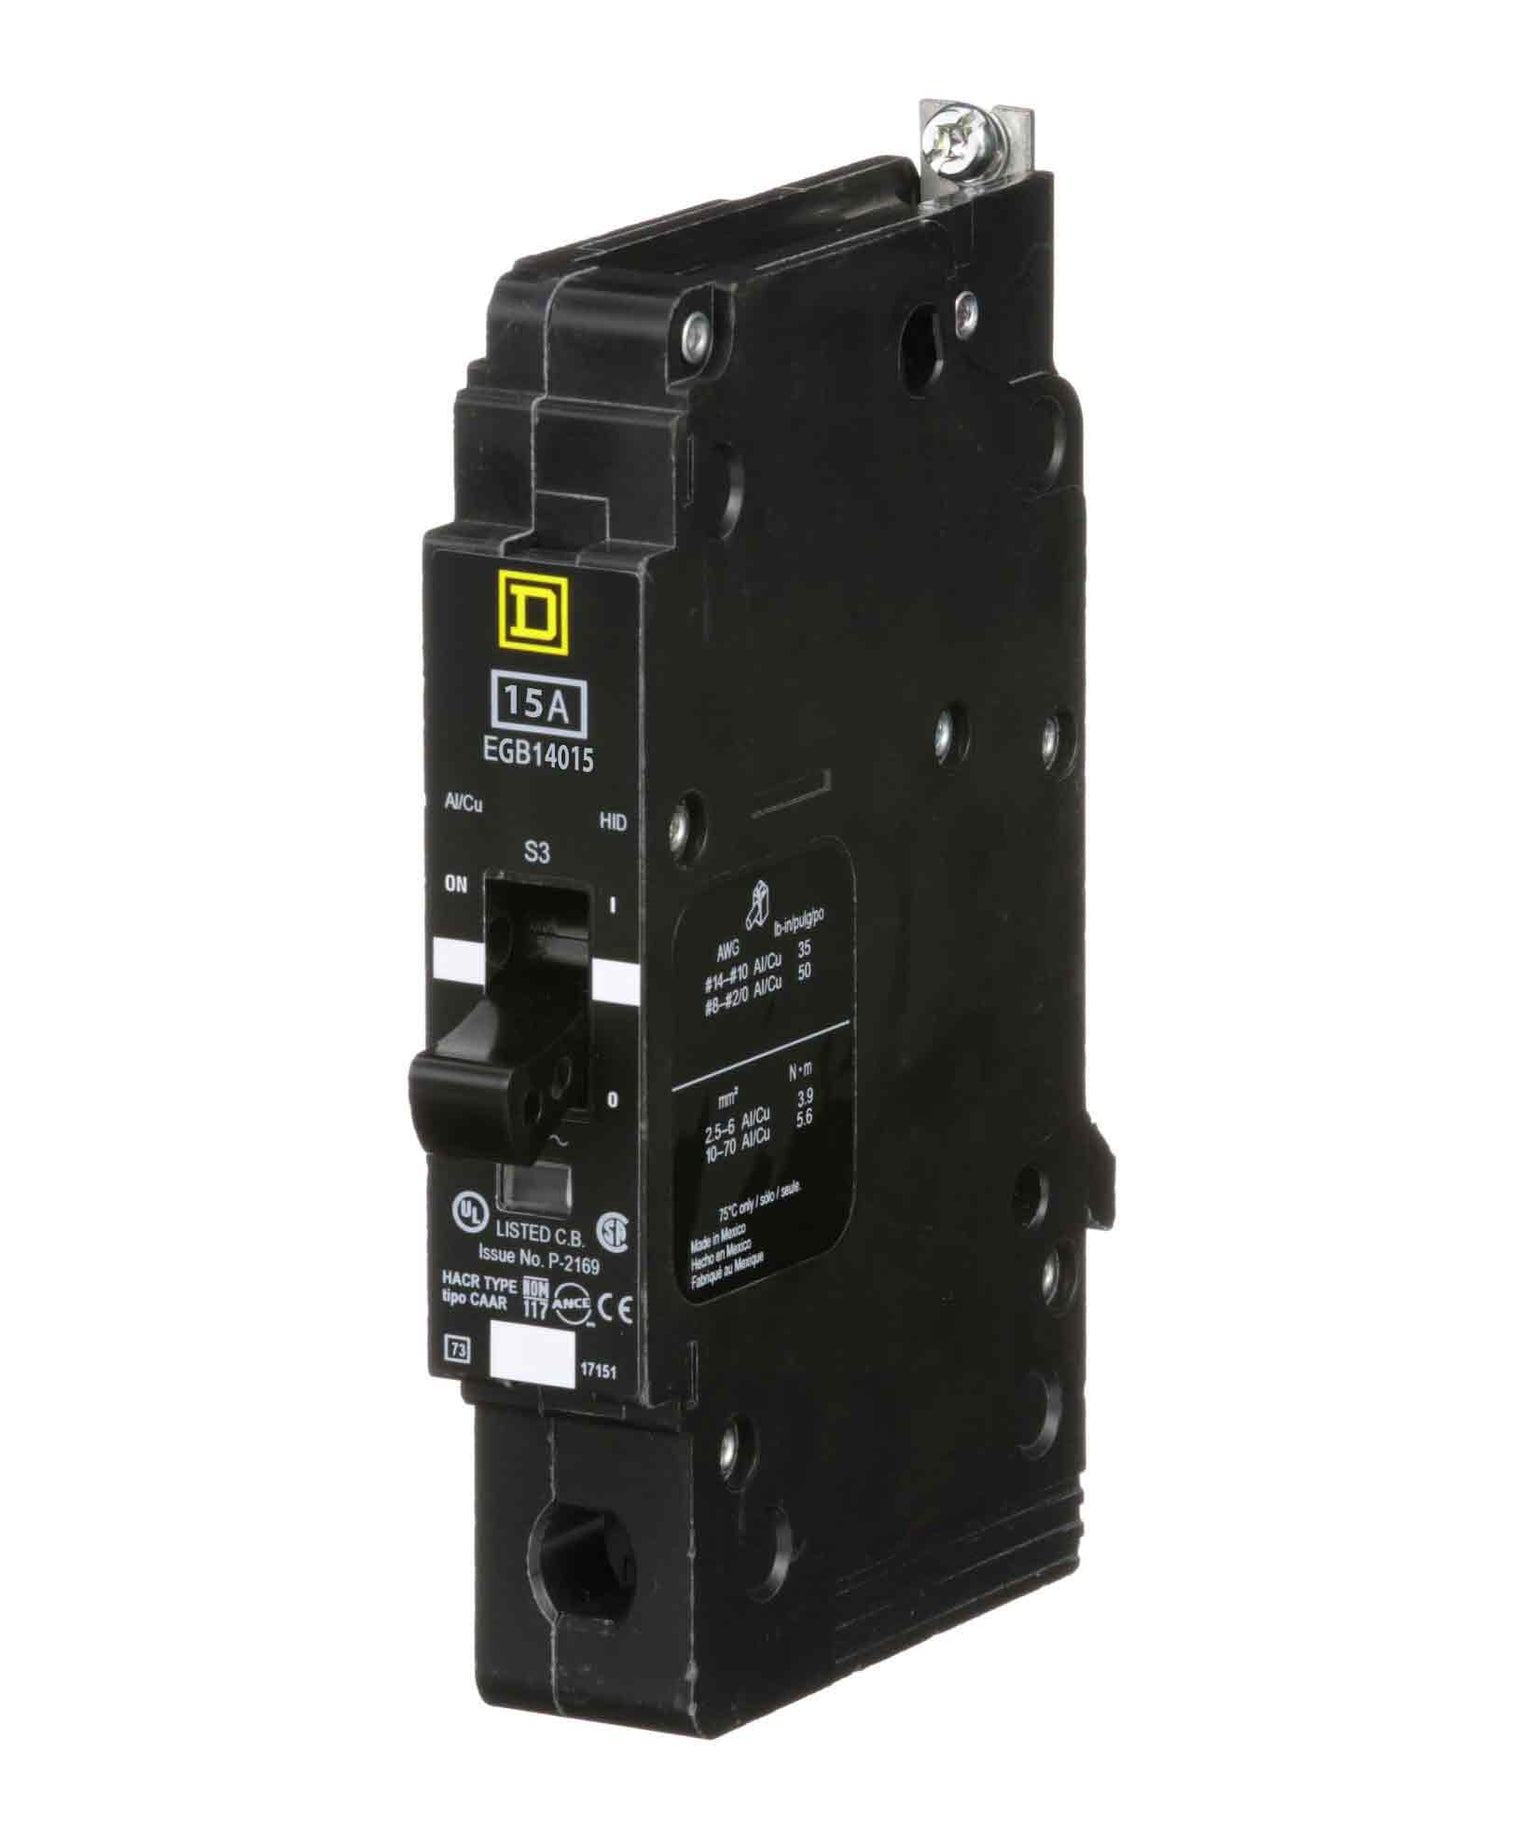 EGB14015 - Square D 15 Amp 1 Pole 277 Volt Bolt-On Molded Case Circuit Breaker